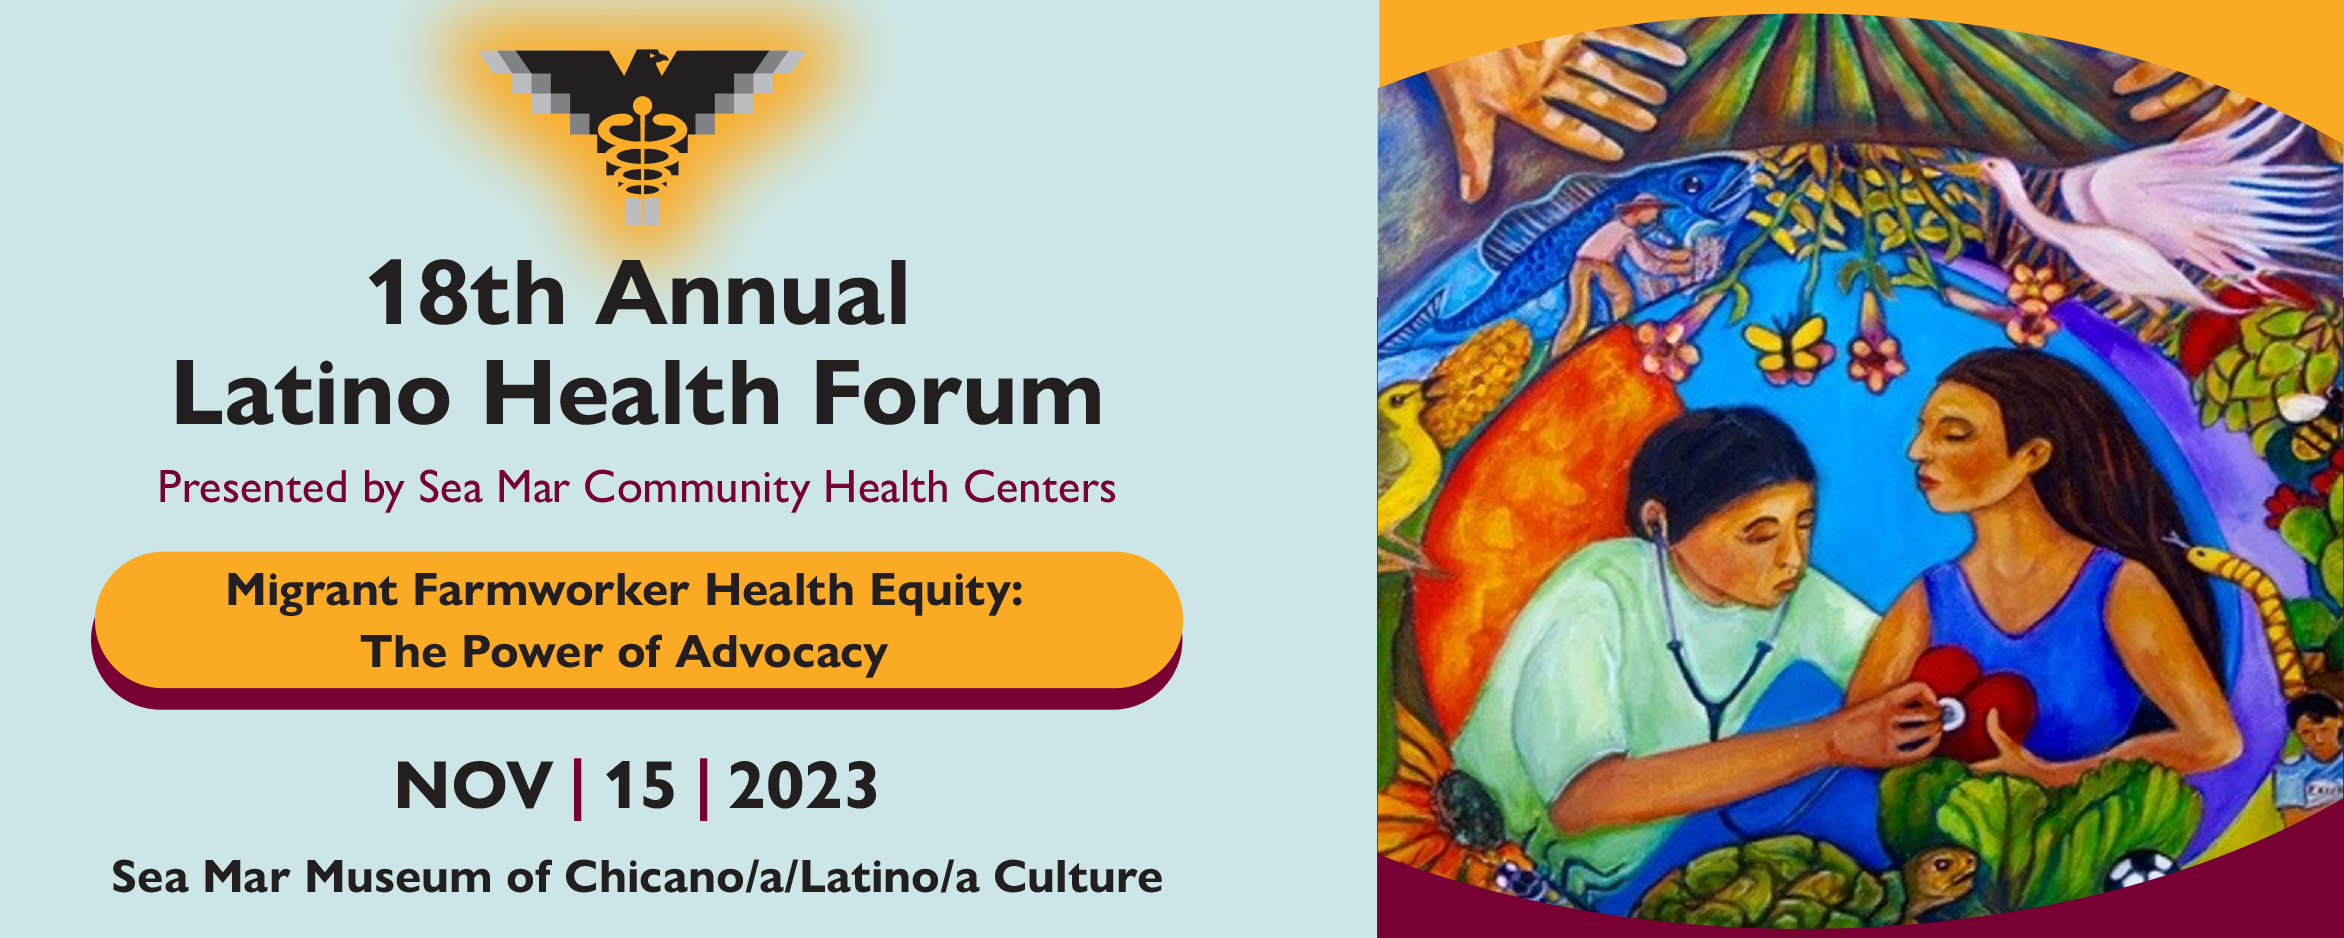 latino-health-forum